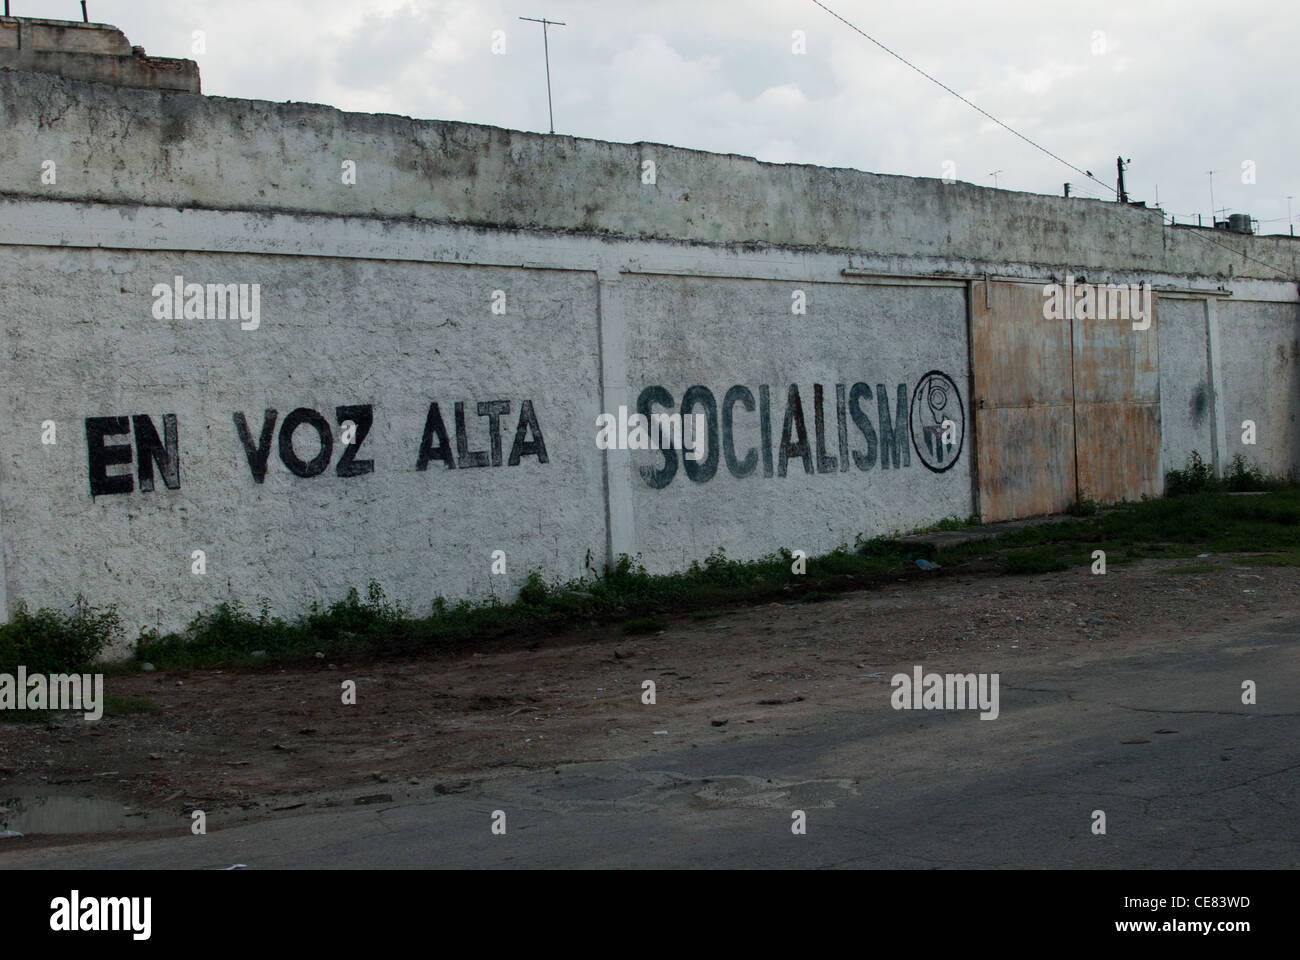 Sag es laut: Sozialismus (En Voz Alta Sozialismus) Schrift an der Wand in Cienfuegos, Kuba Stockfoto